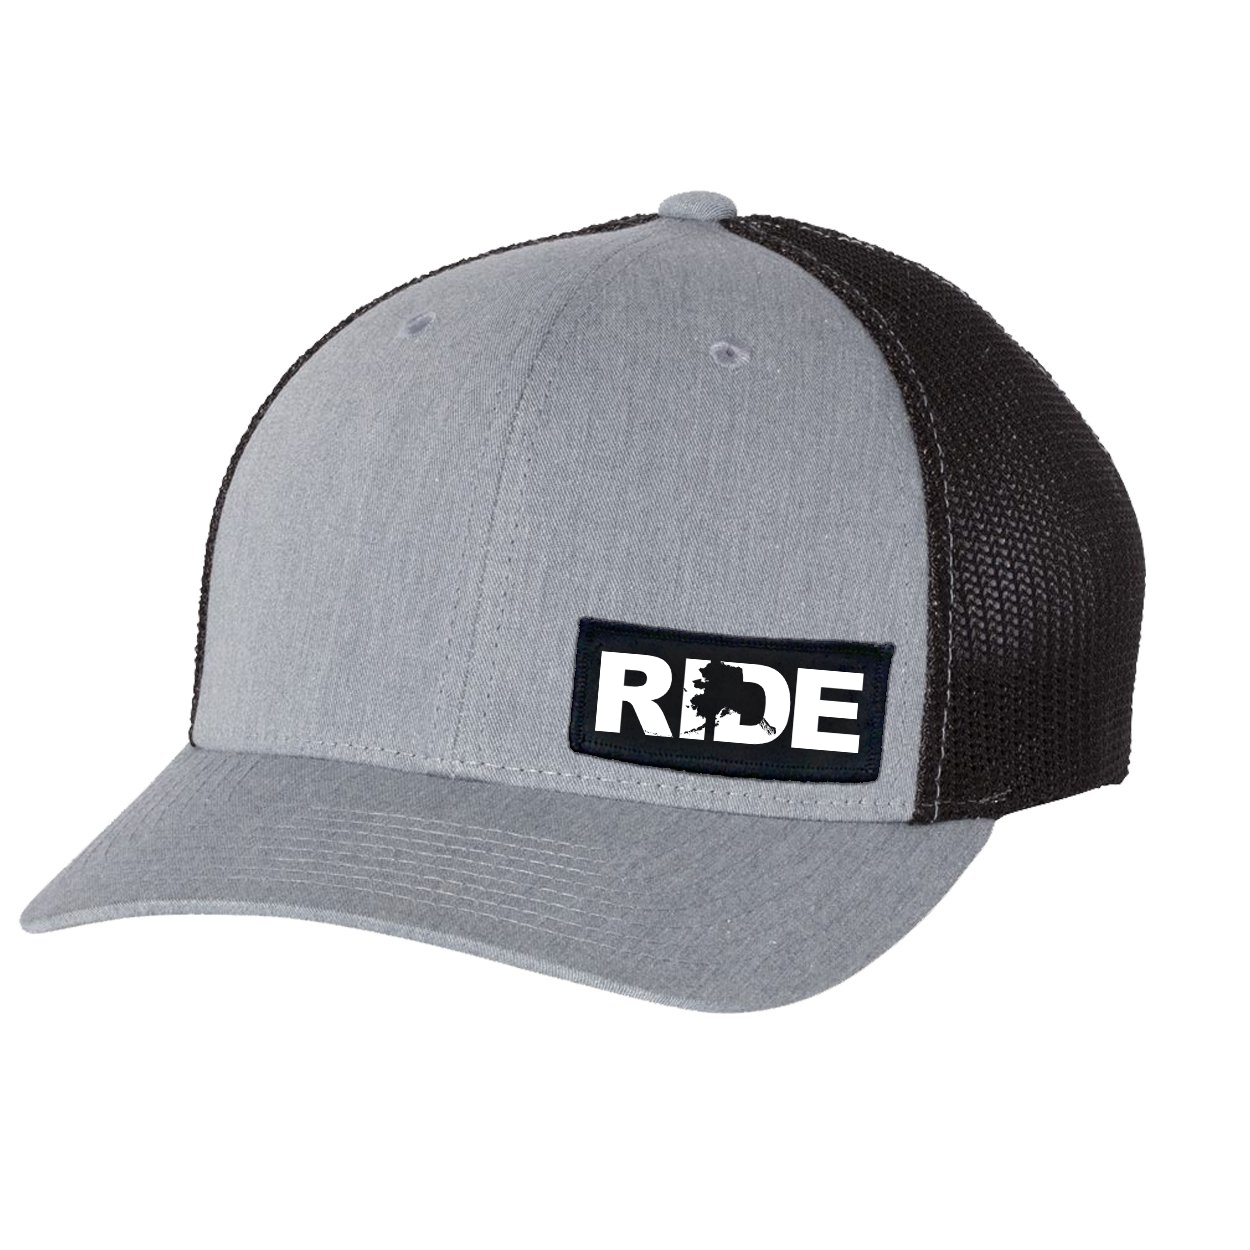 Ride Alaska Night Out Woven Patch Flex-Fit Hat Heather Gray/Black (White Logo)